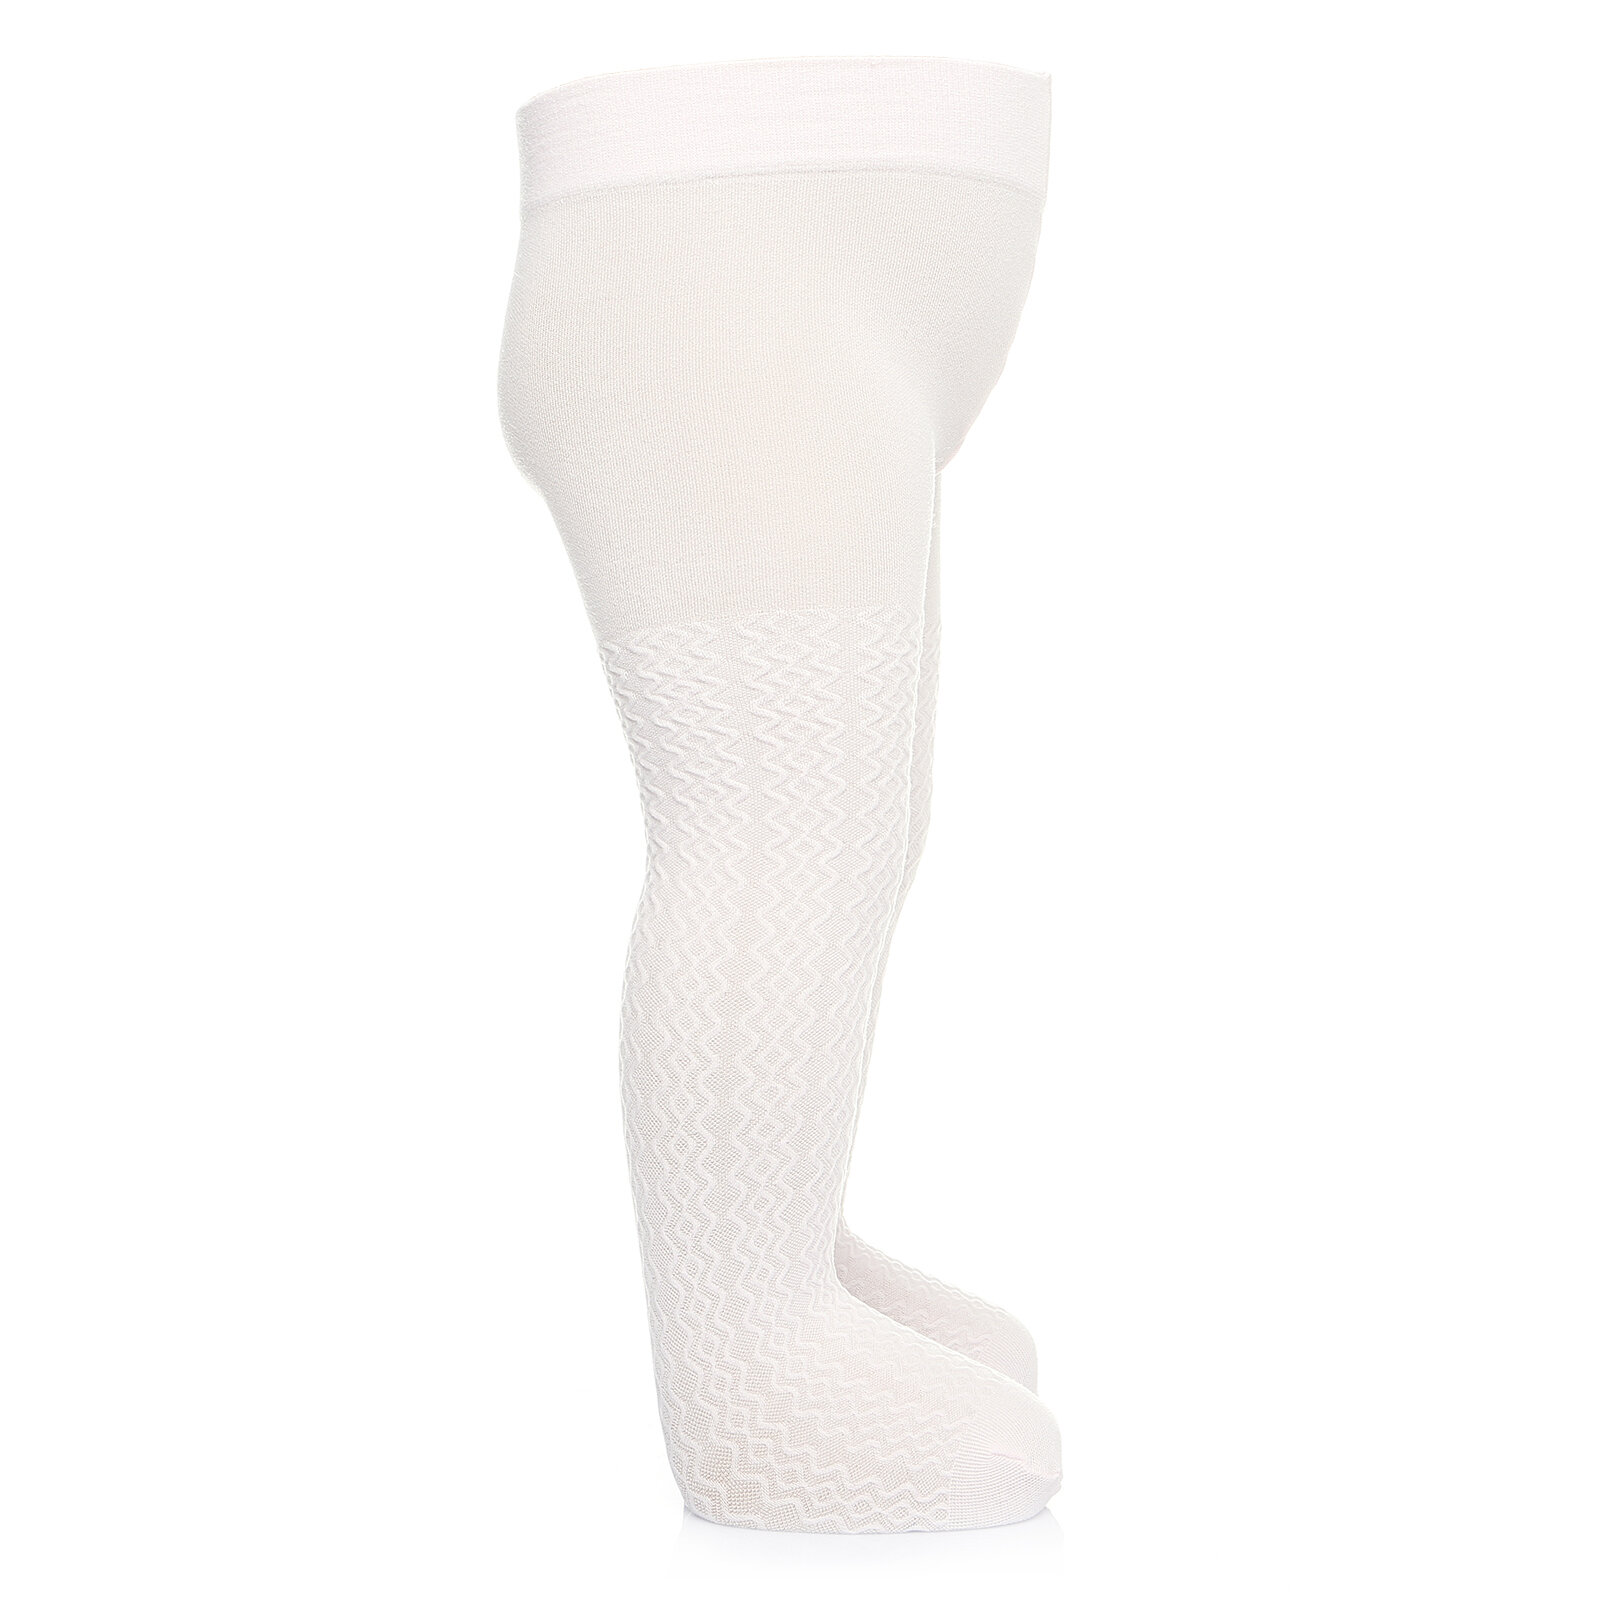 Sarmal Mus Külotlu Çorap